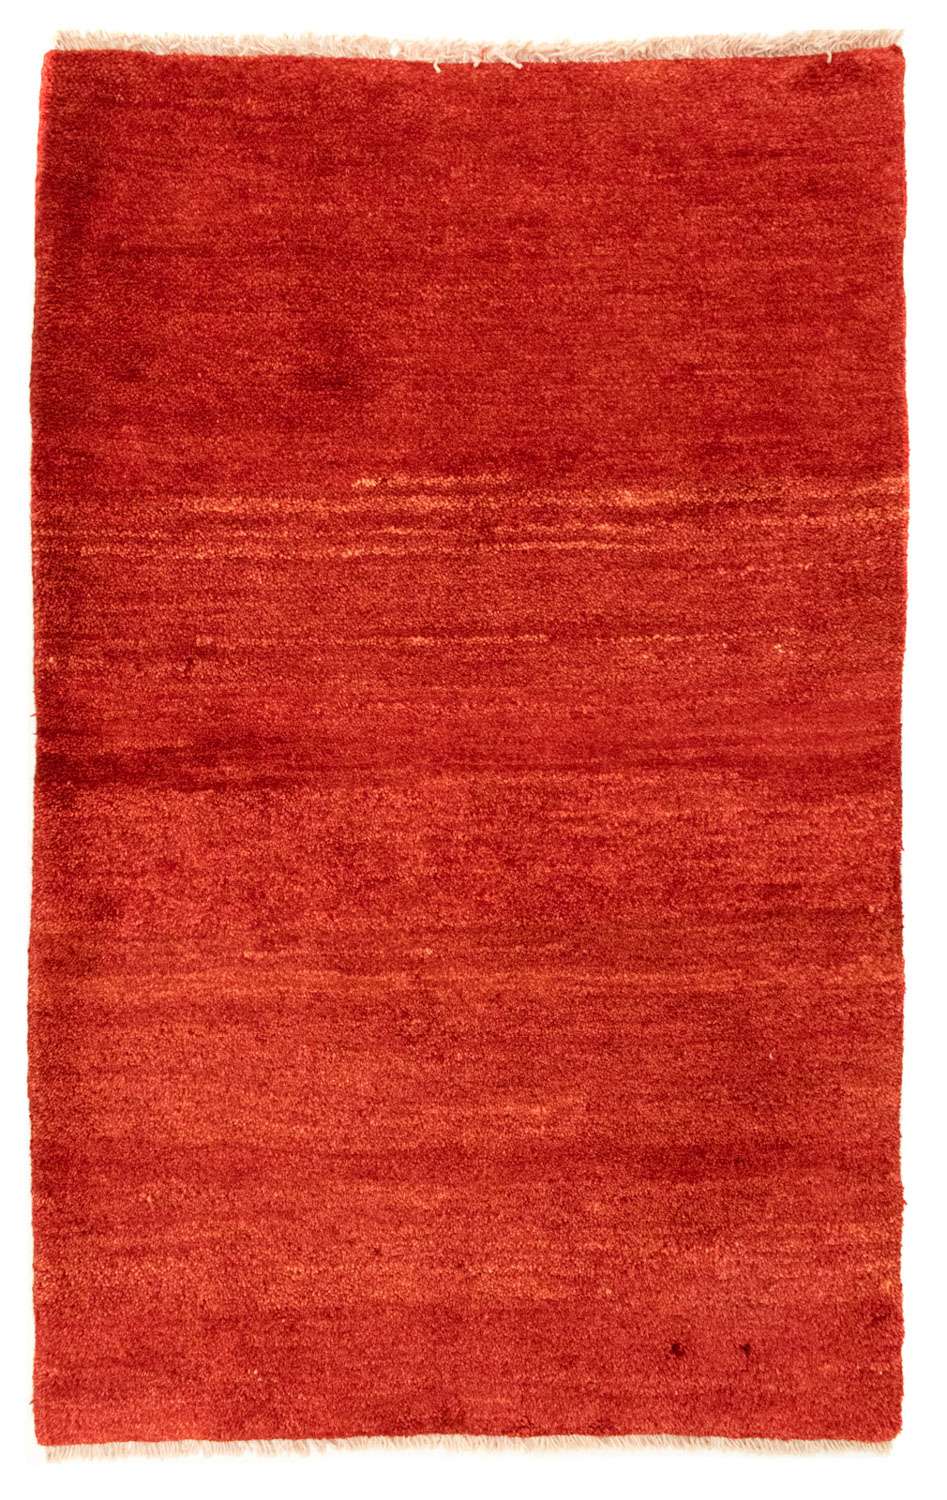 Gabbeh-tæppe - Persisk - 125 x 76 cm - rød